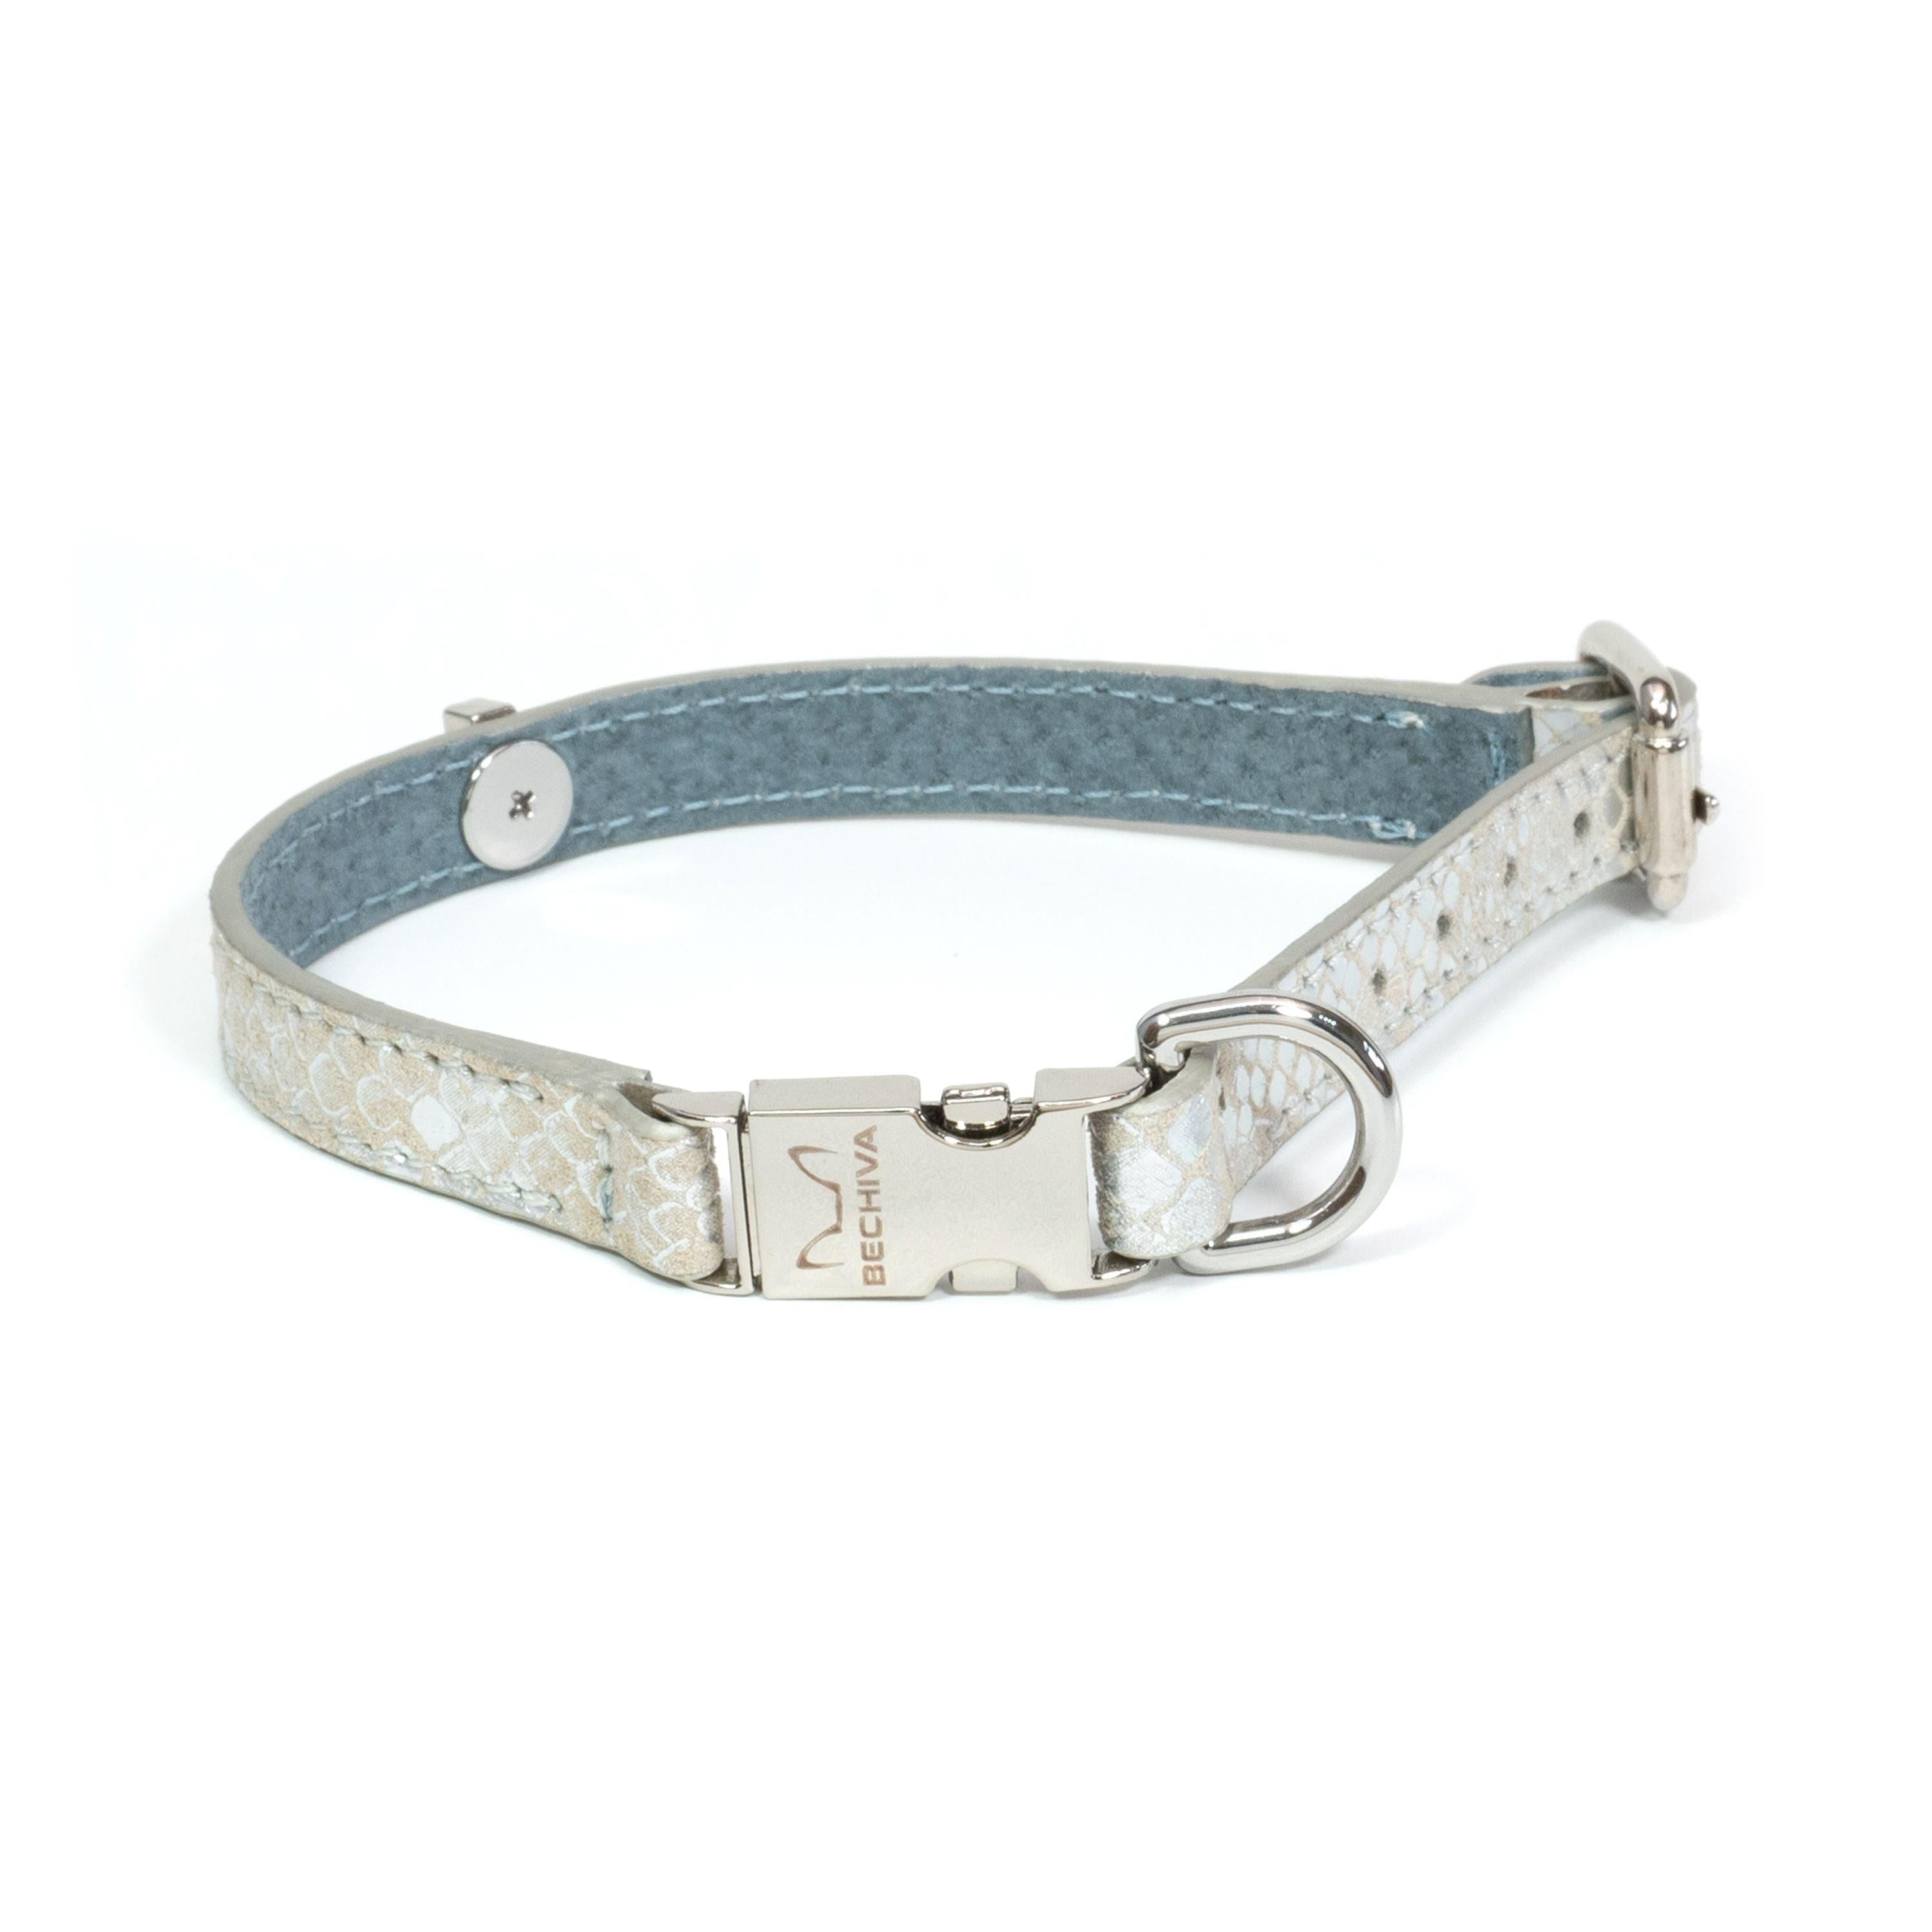 Leather Dog Collar Luna Python Silver - Bechiva